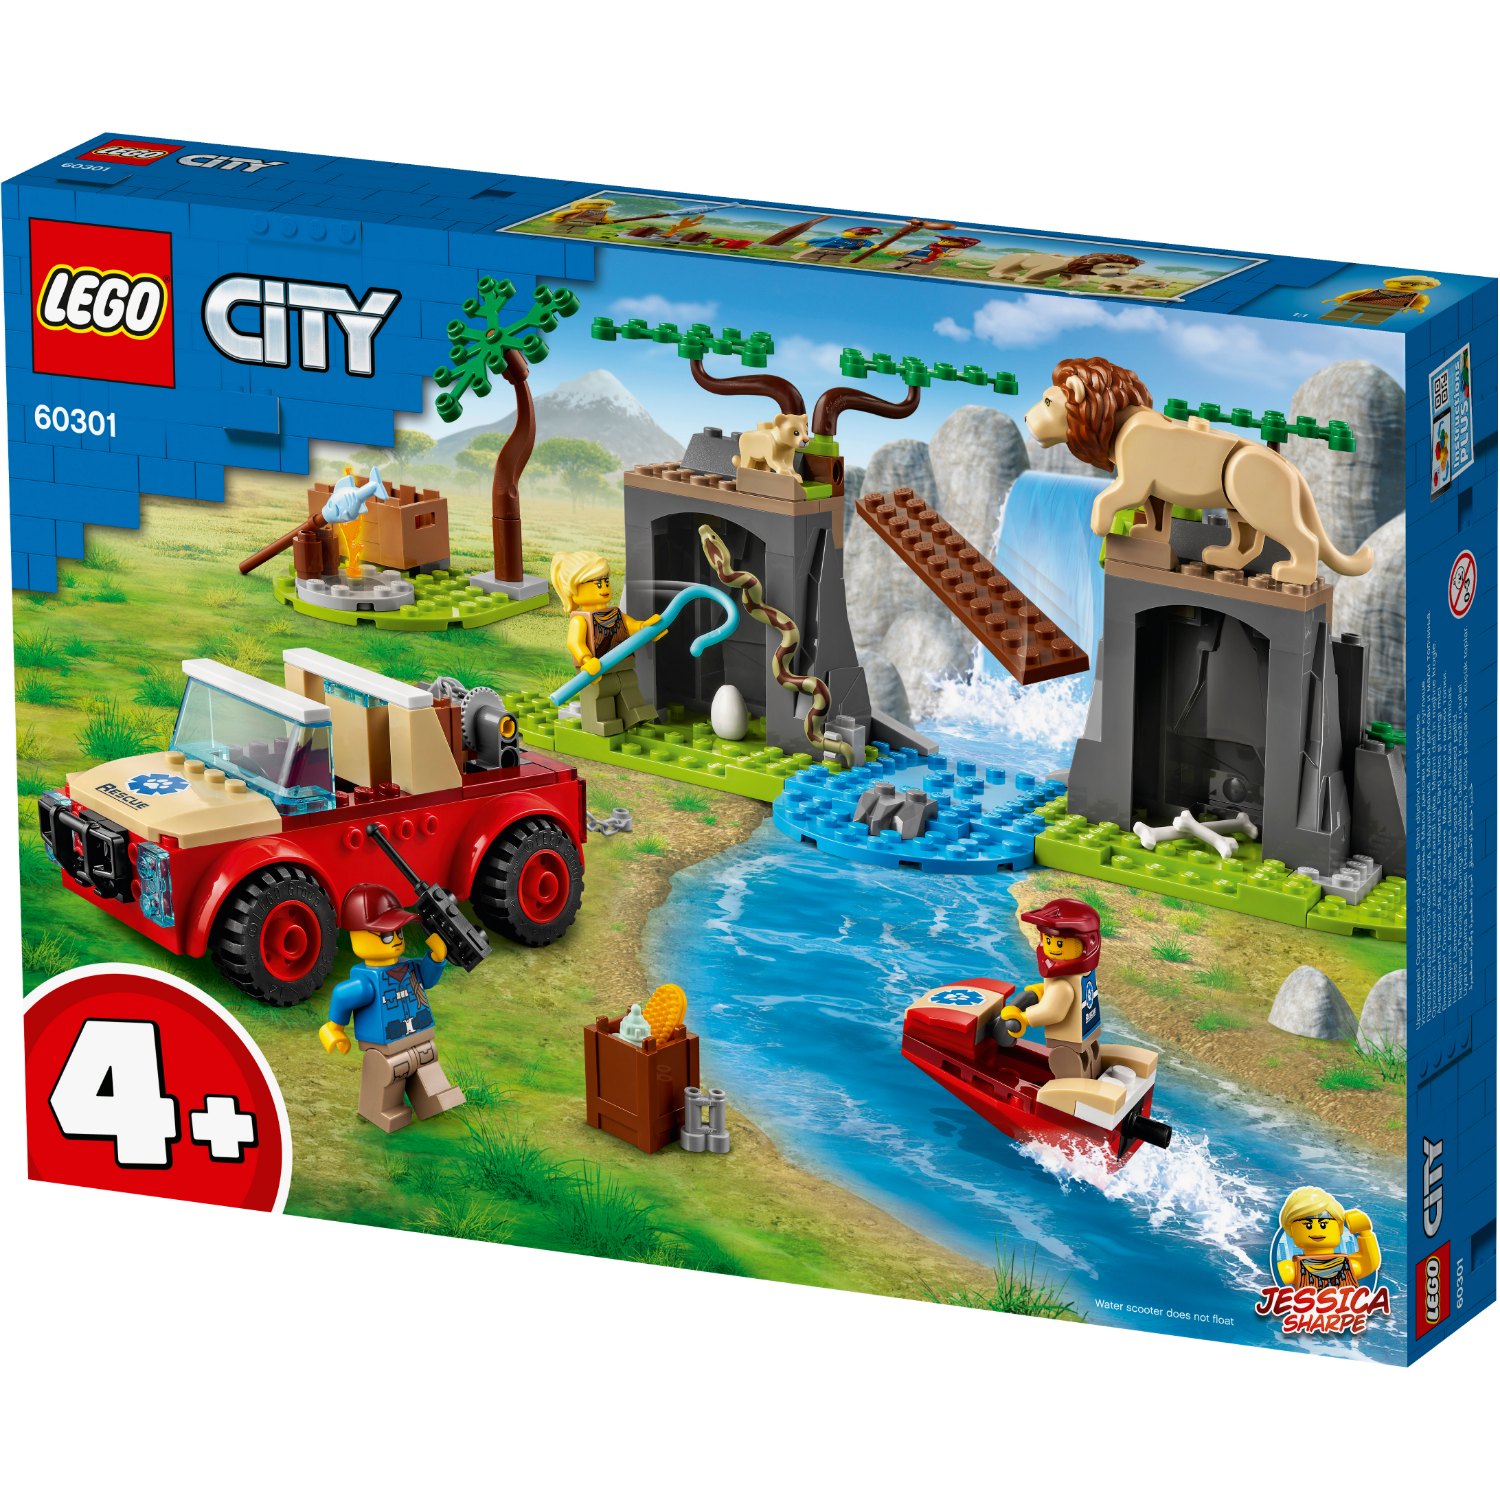 LEGO CITY 60301 WILDLIFE OFF-ROADER